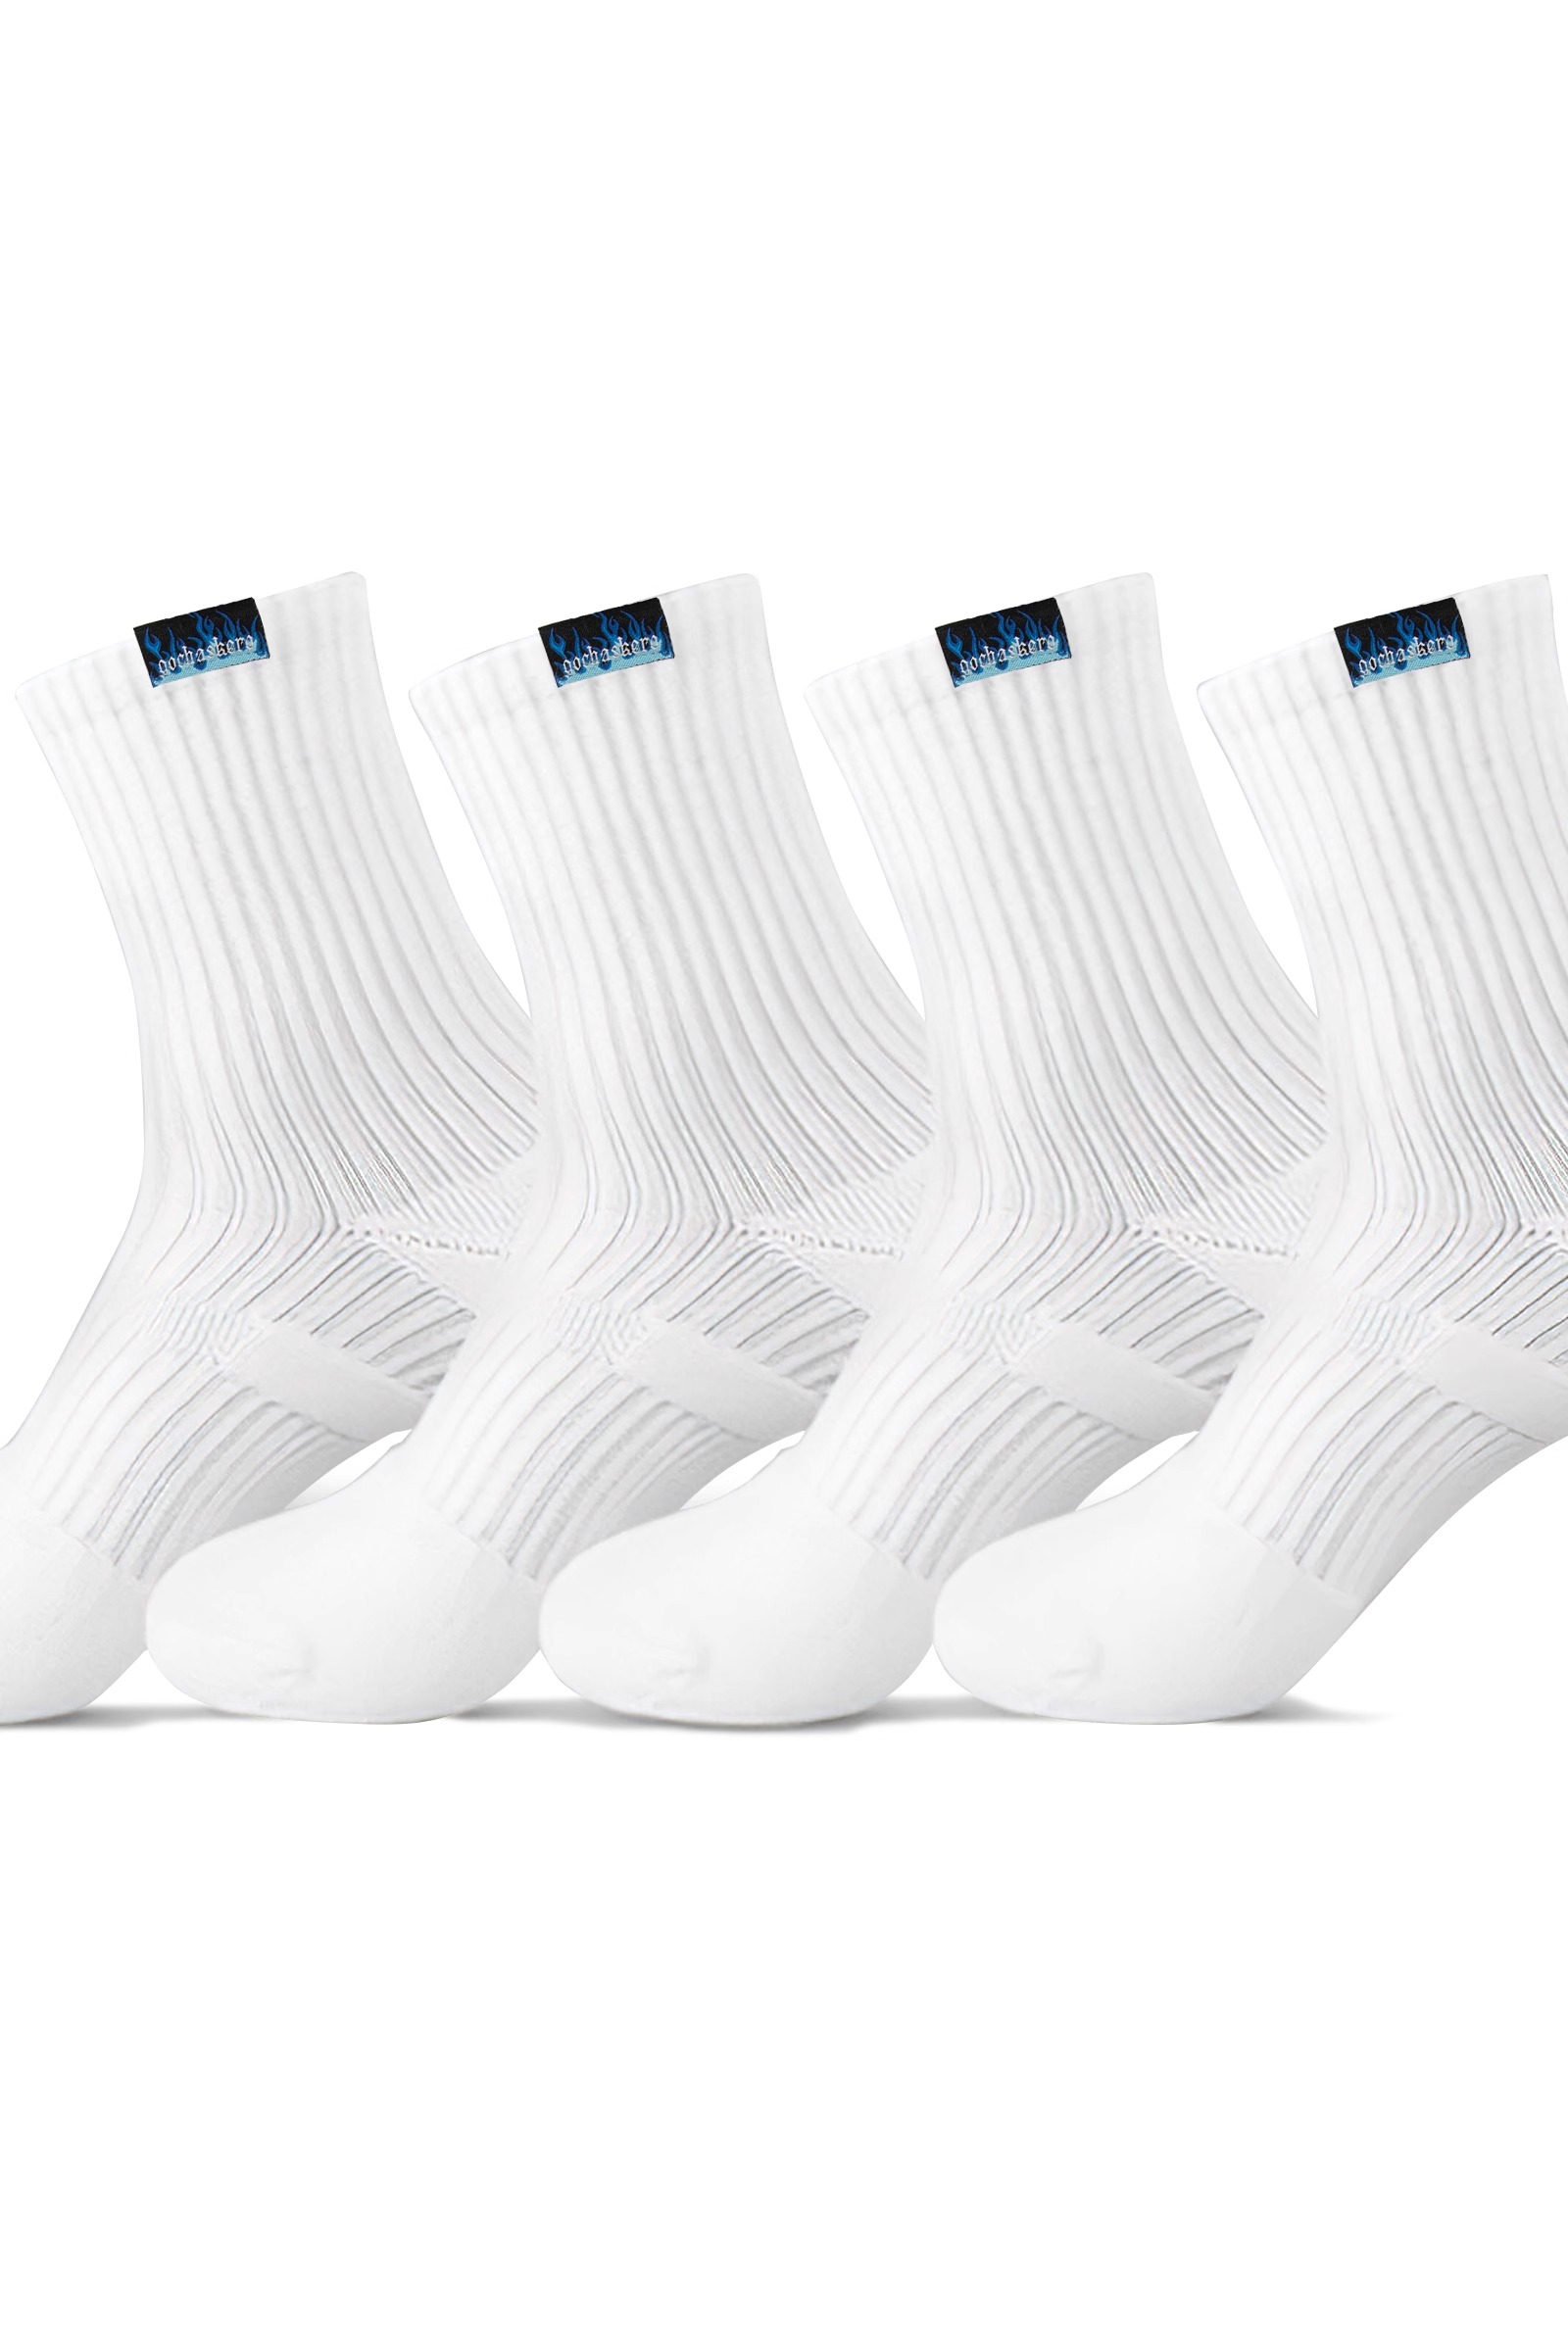 GOCHASKERO Labeled towel socks